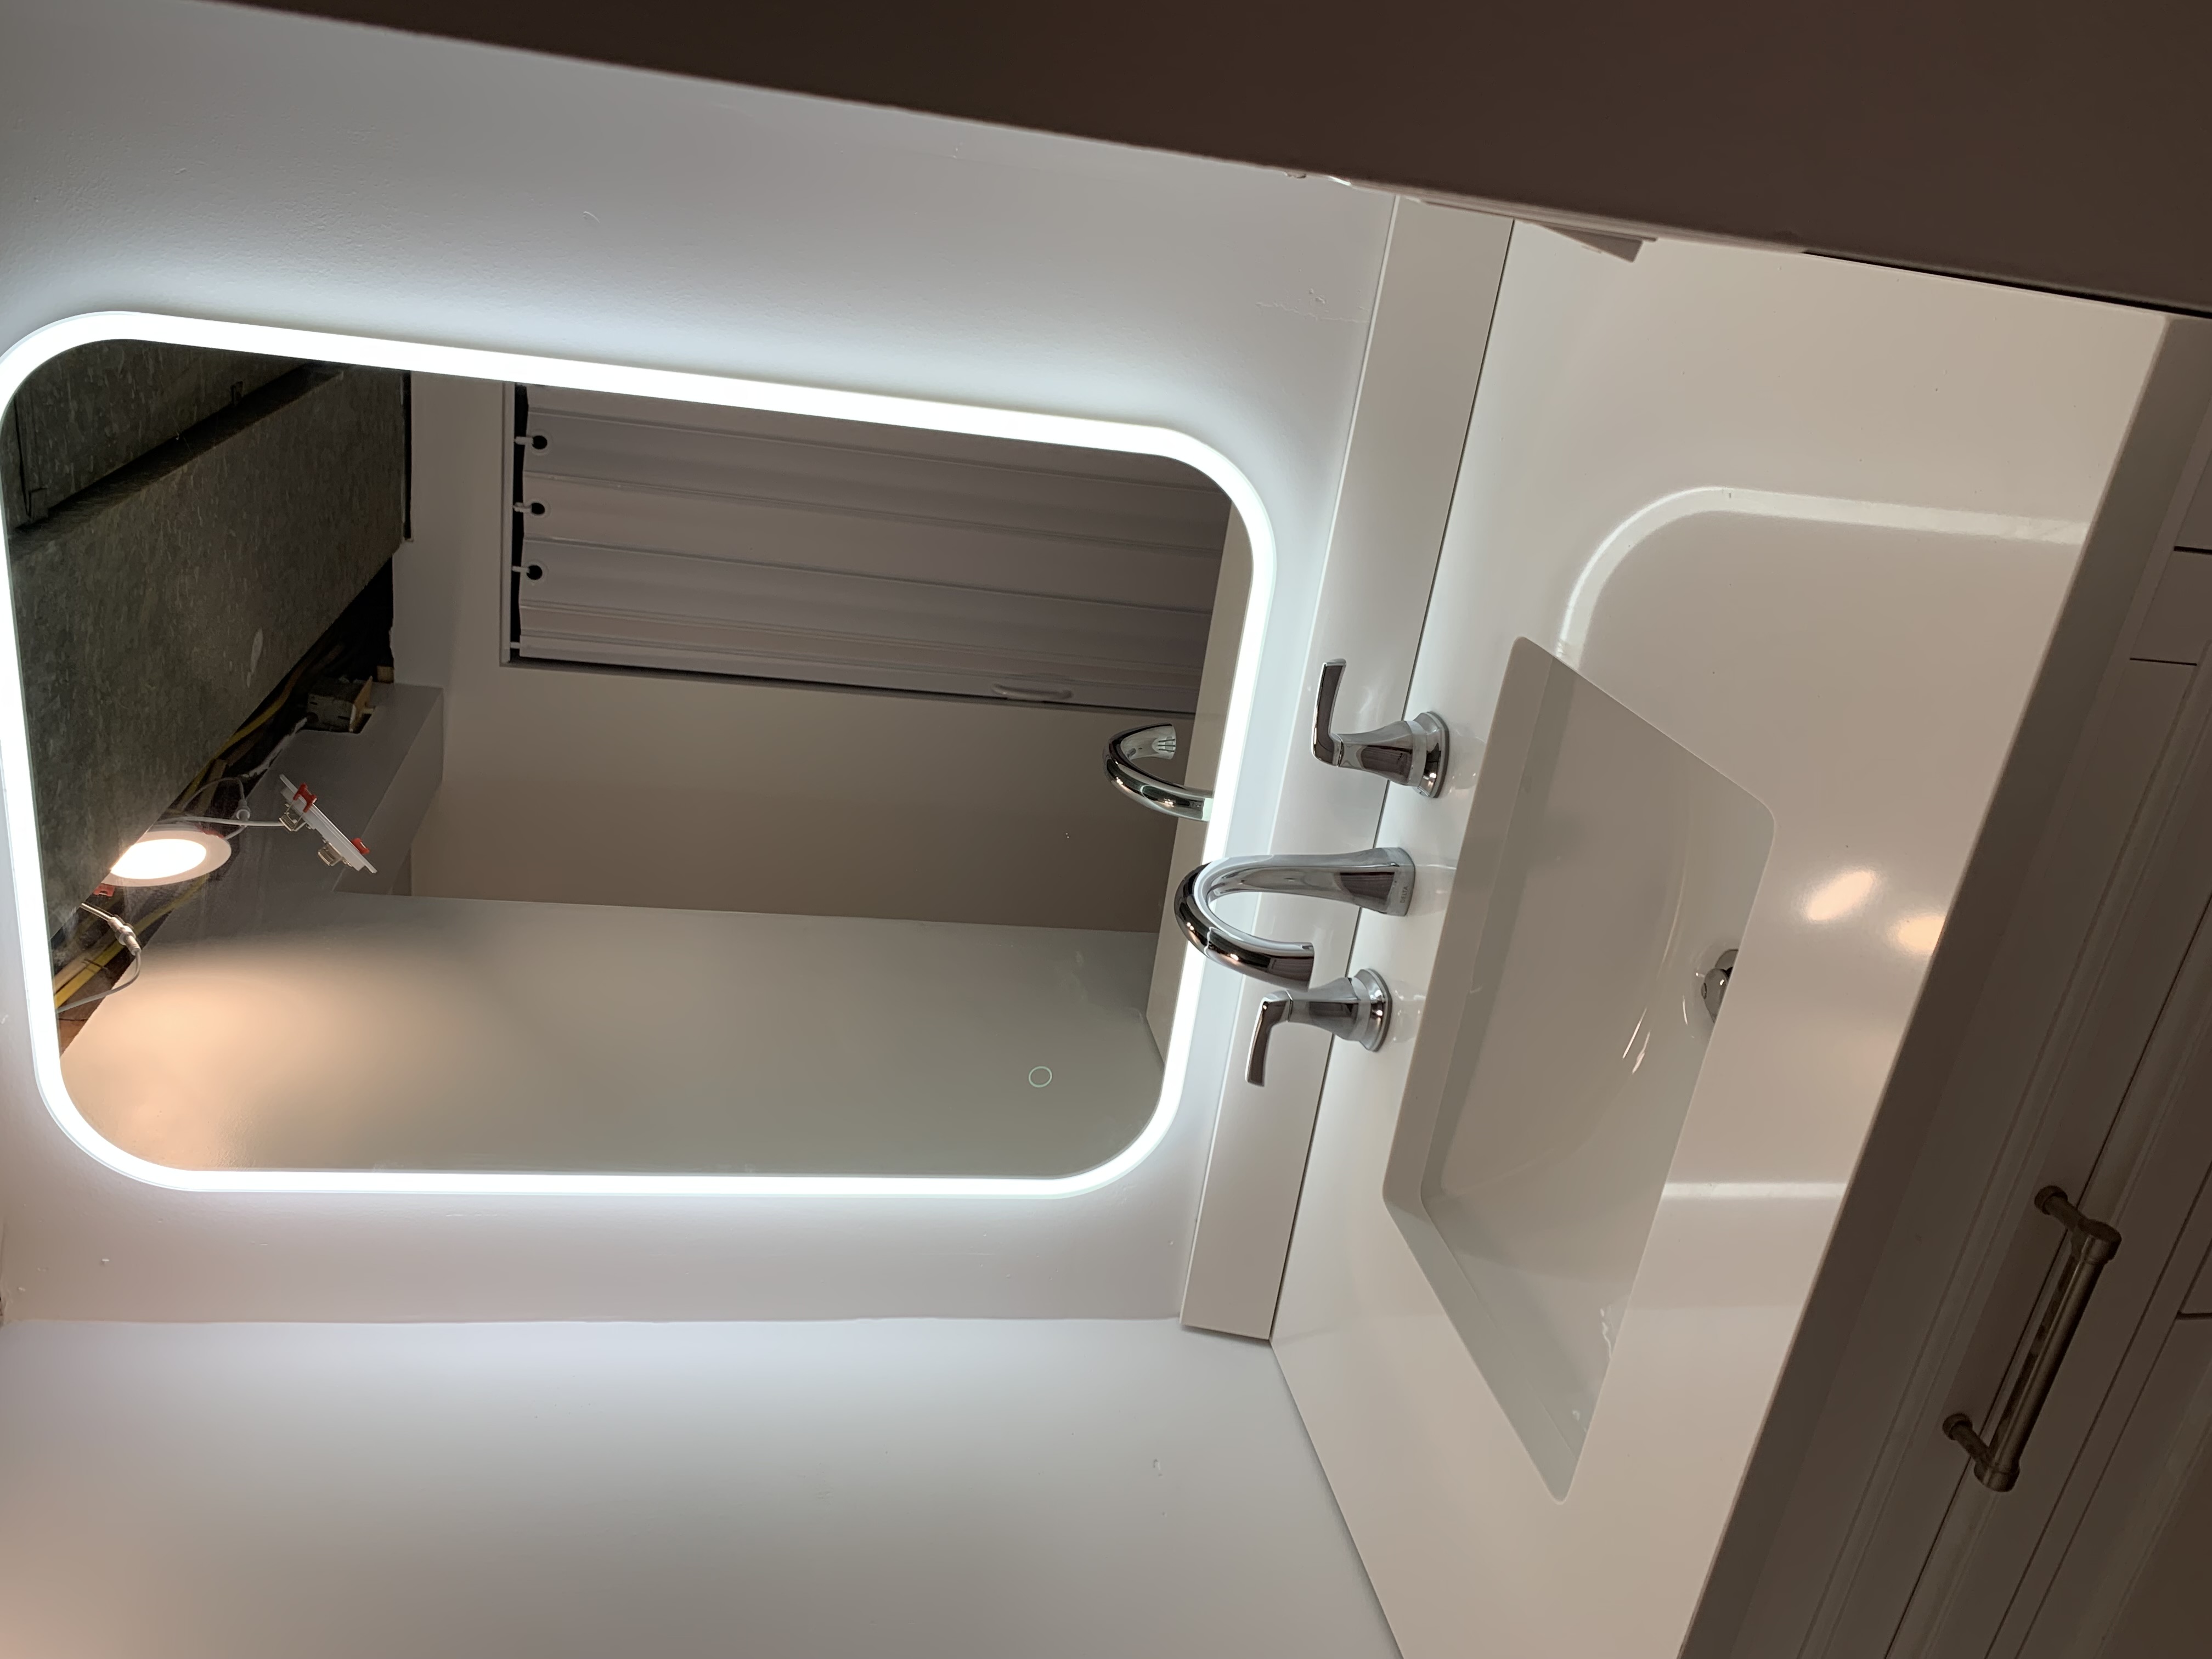 How to install an LED bathroom mirror